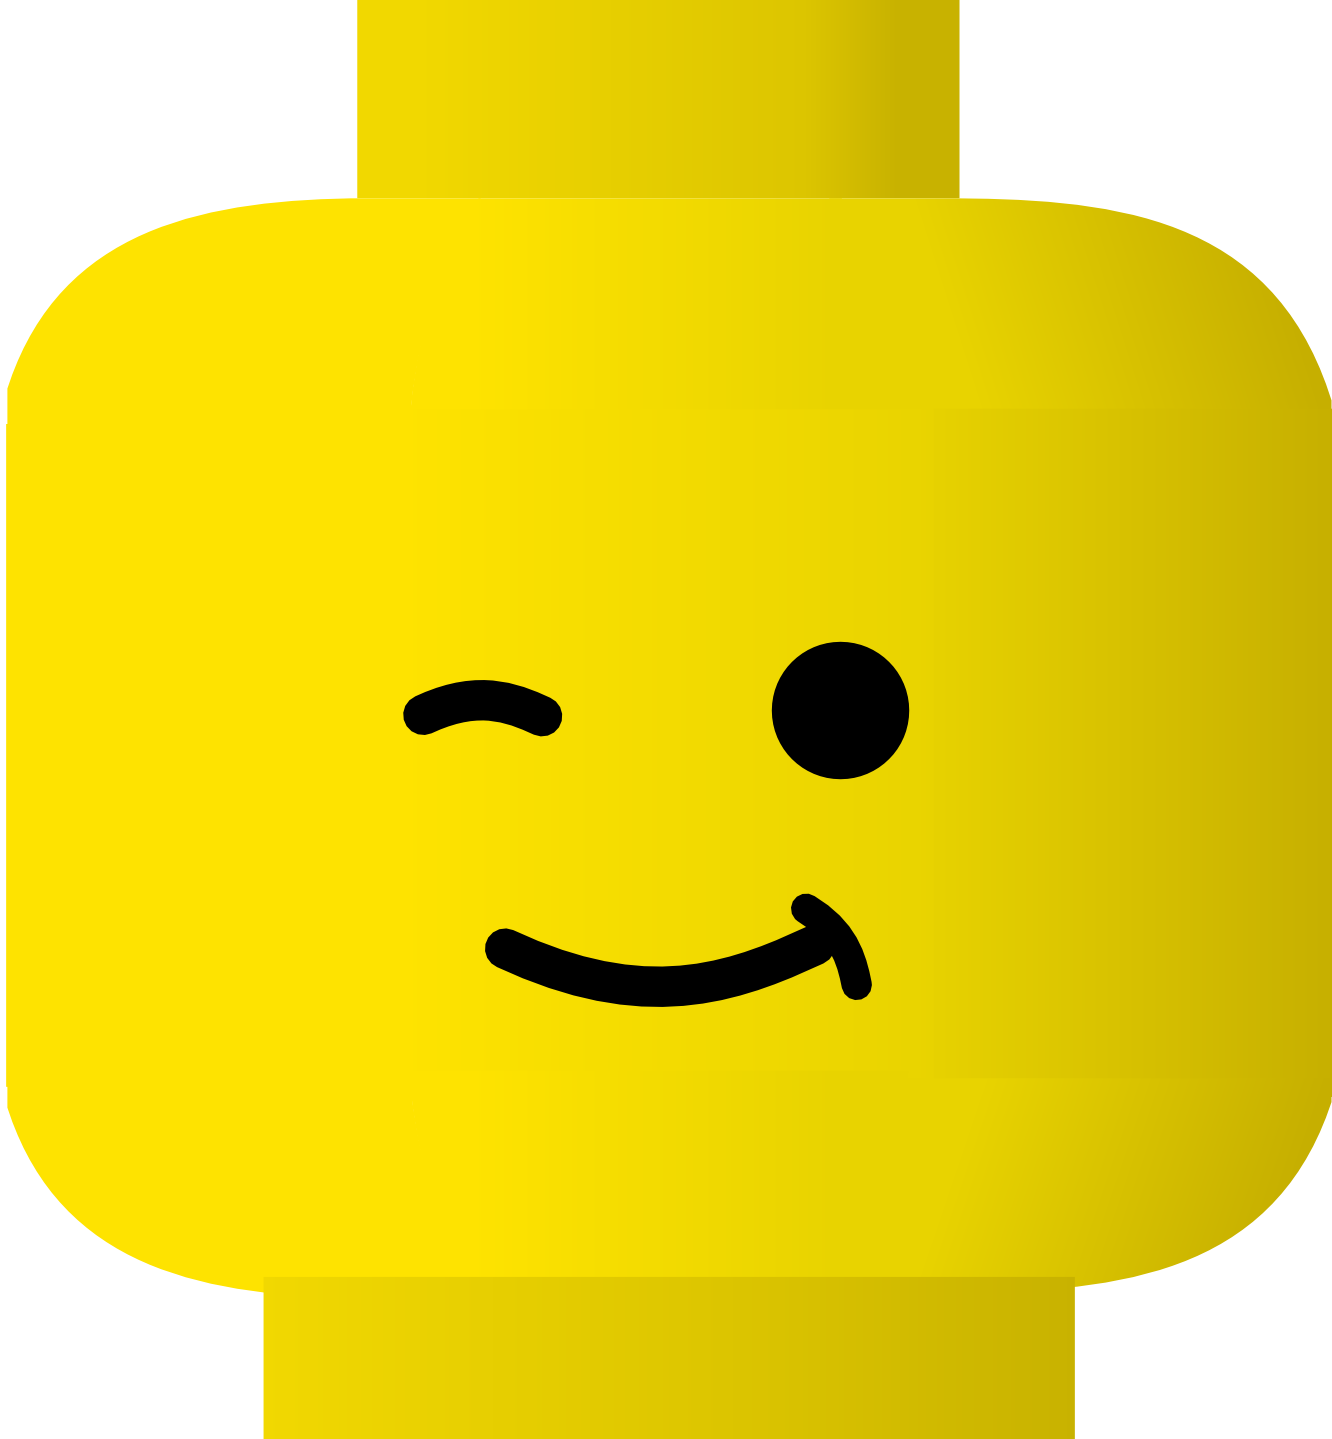 Lego Man Head Clipart